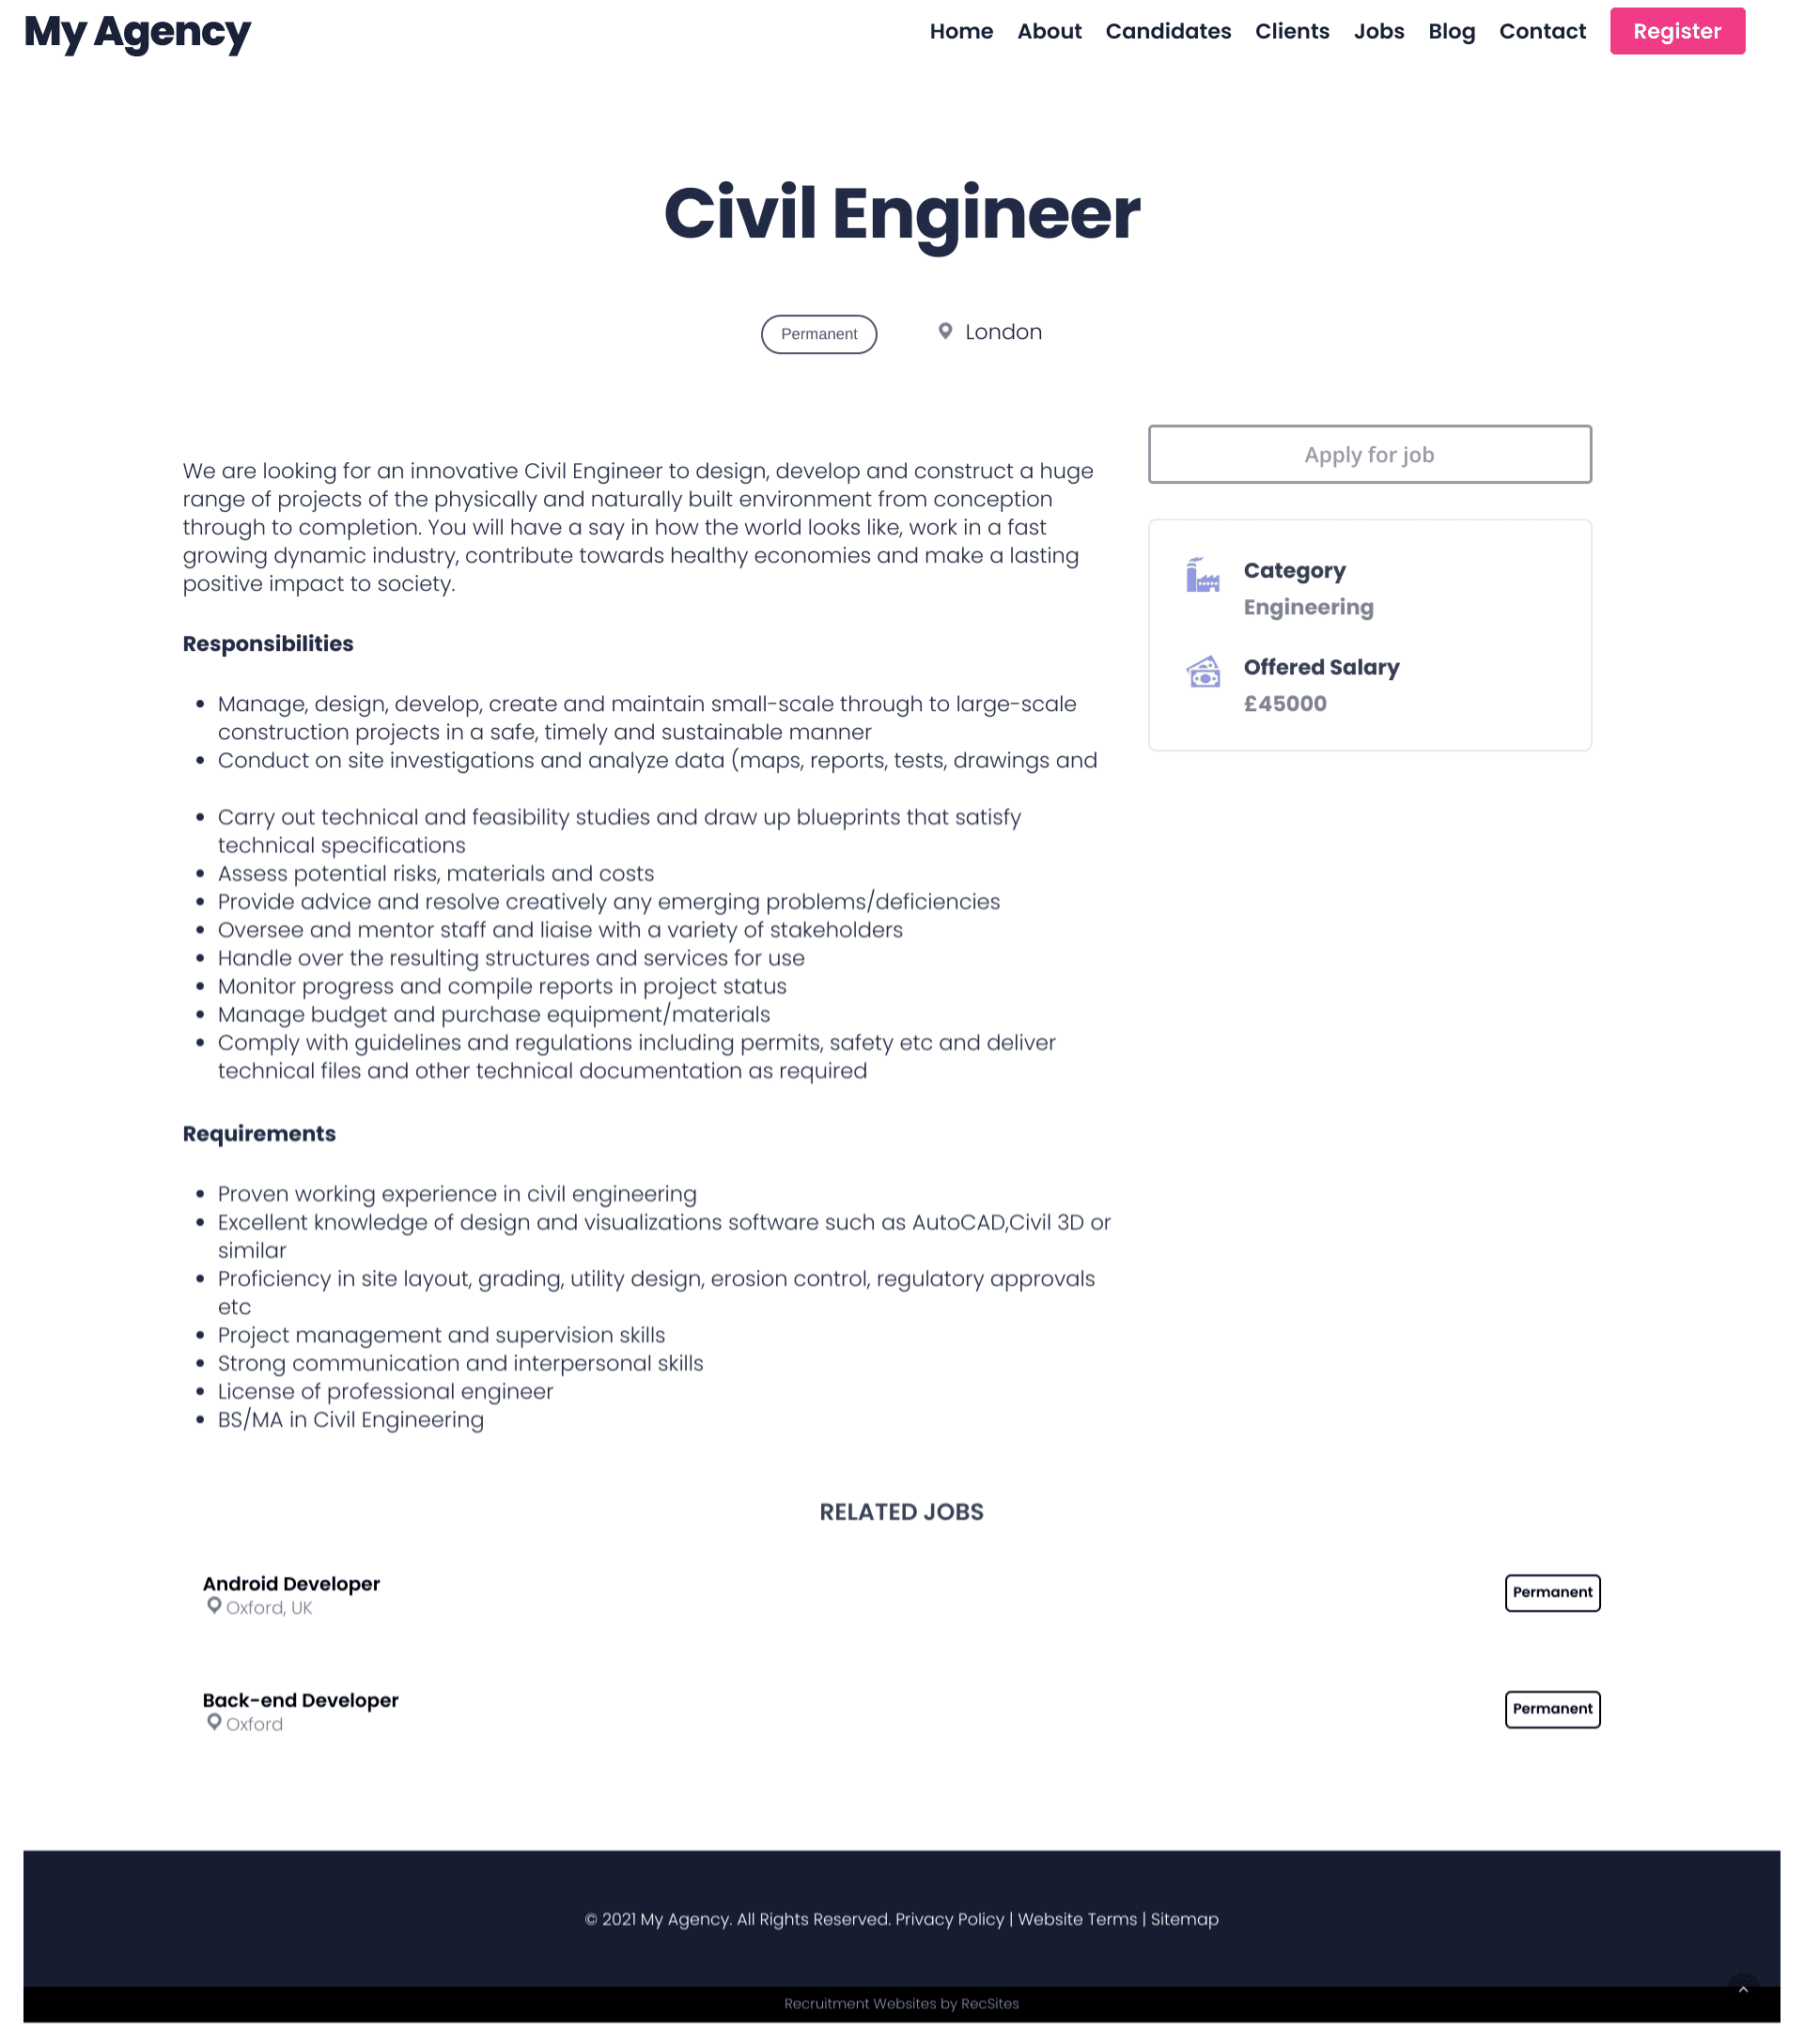 Recruitment web design job detail image.